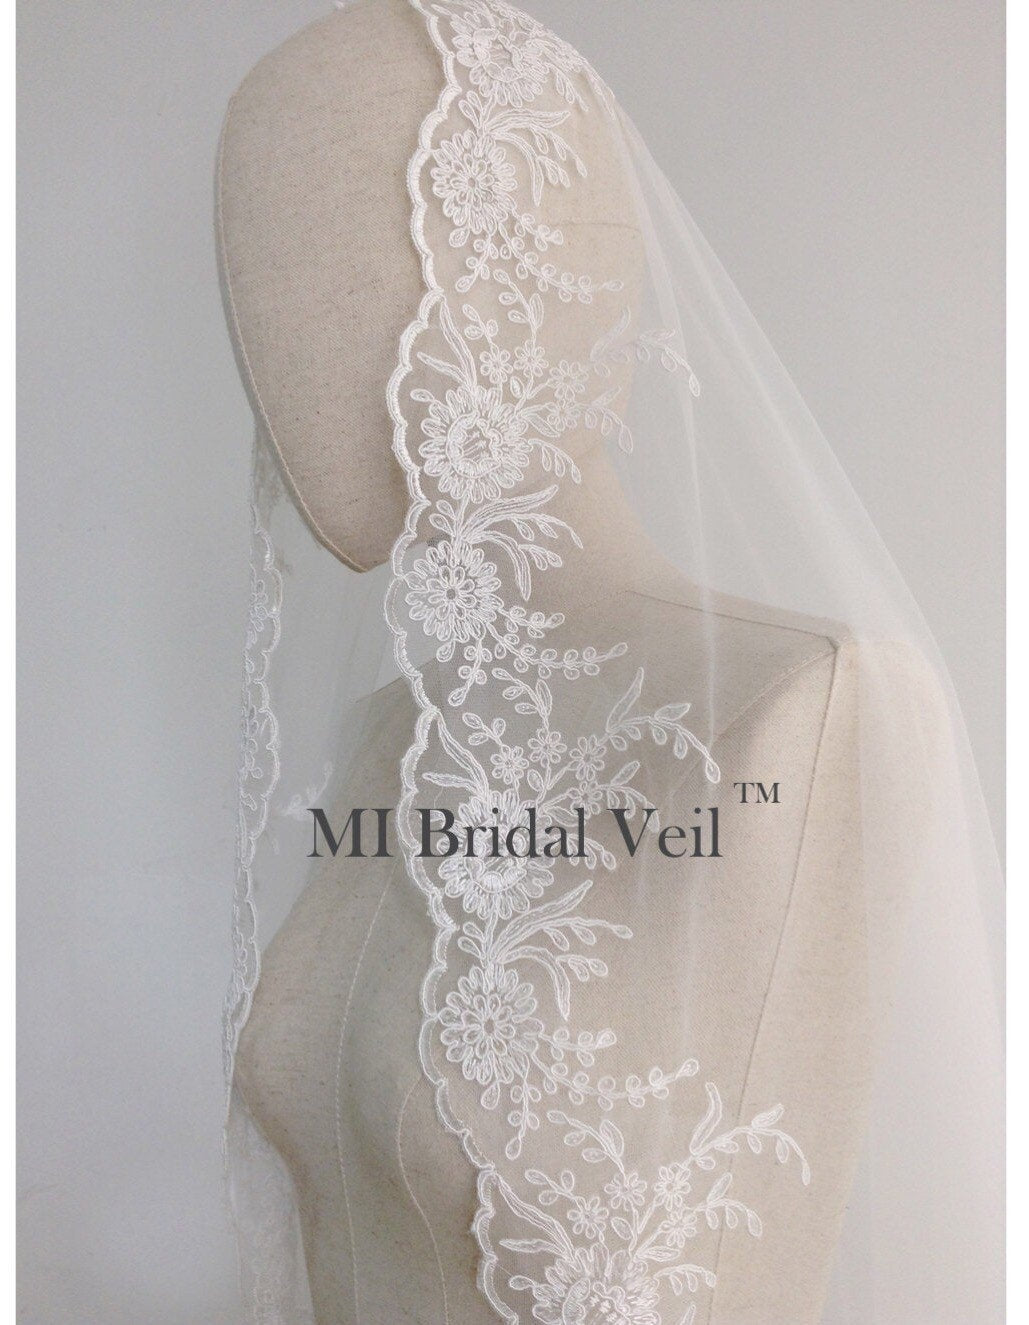 One Tier Veil Wedding Leaf Veil Ivory Lace Trim Veil Lace 